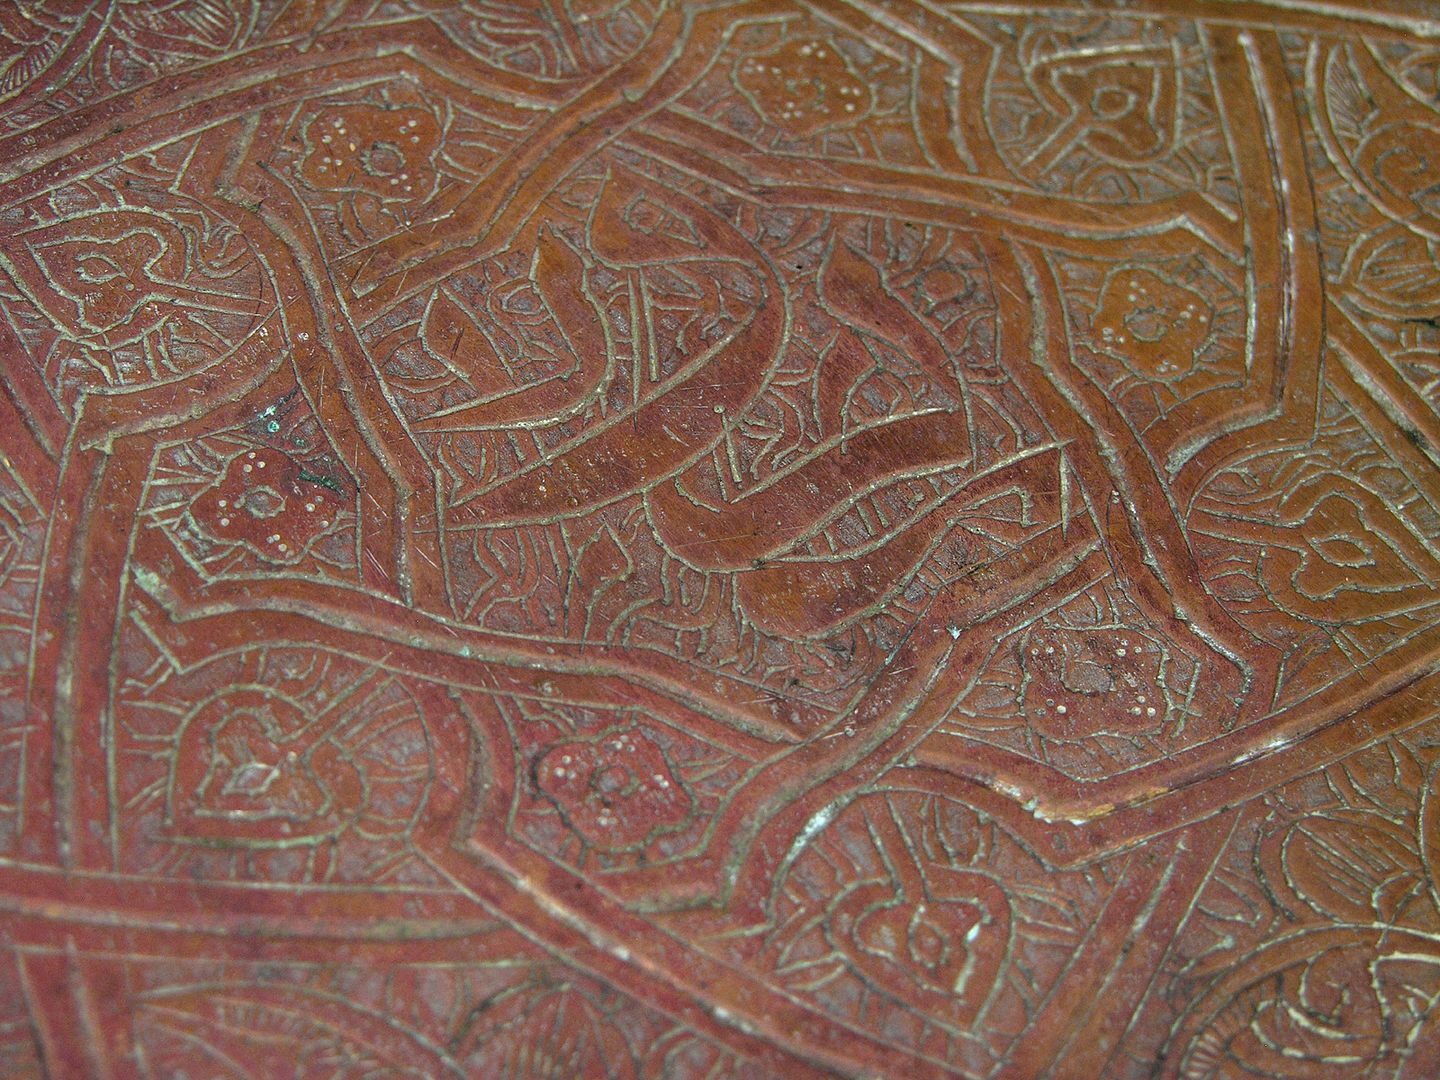   Islamic Middle East Brass Platter Engraved Geometric Design 11  